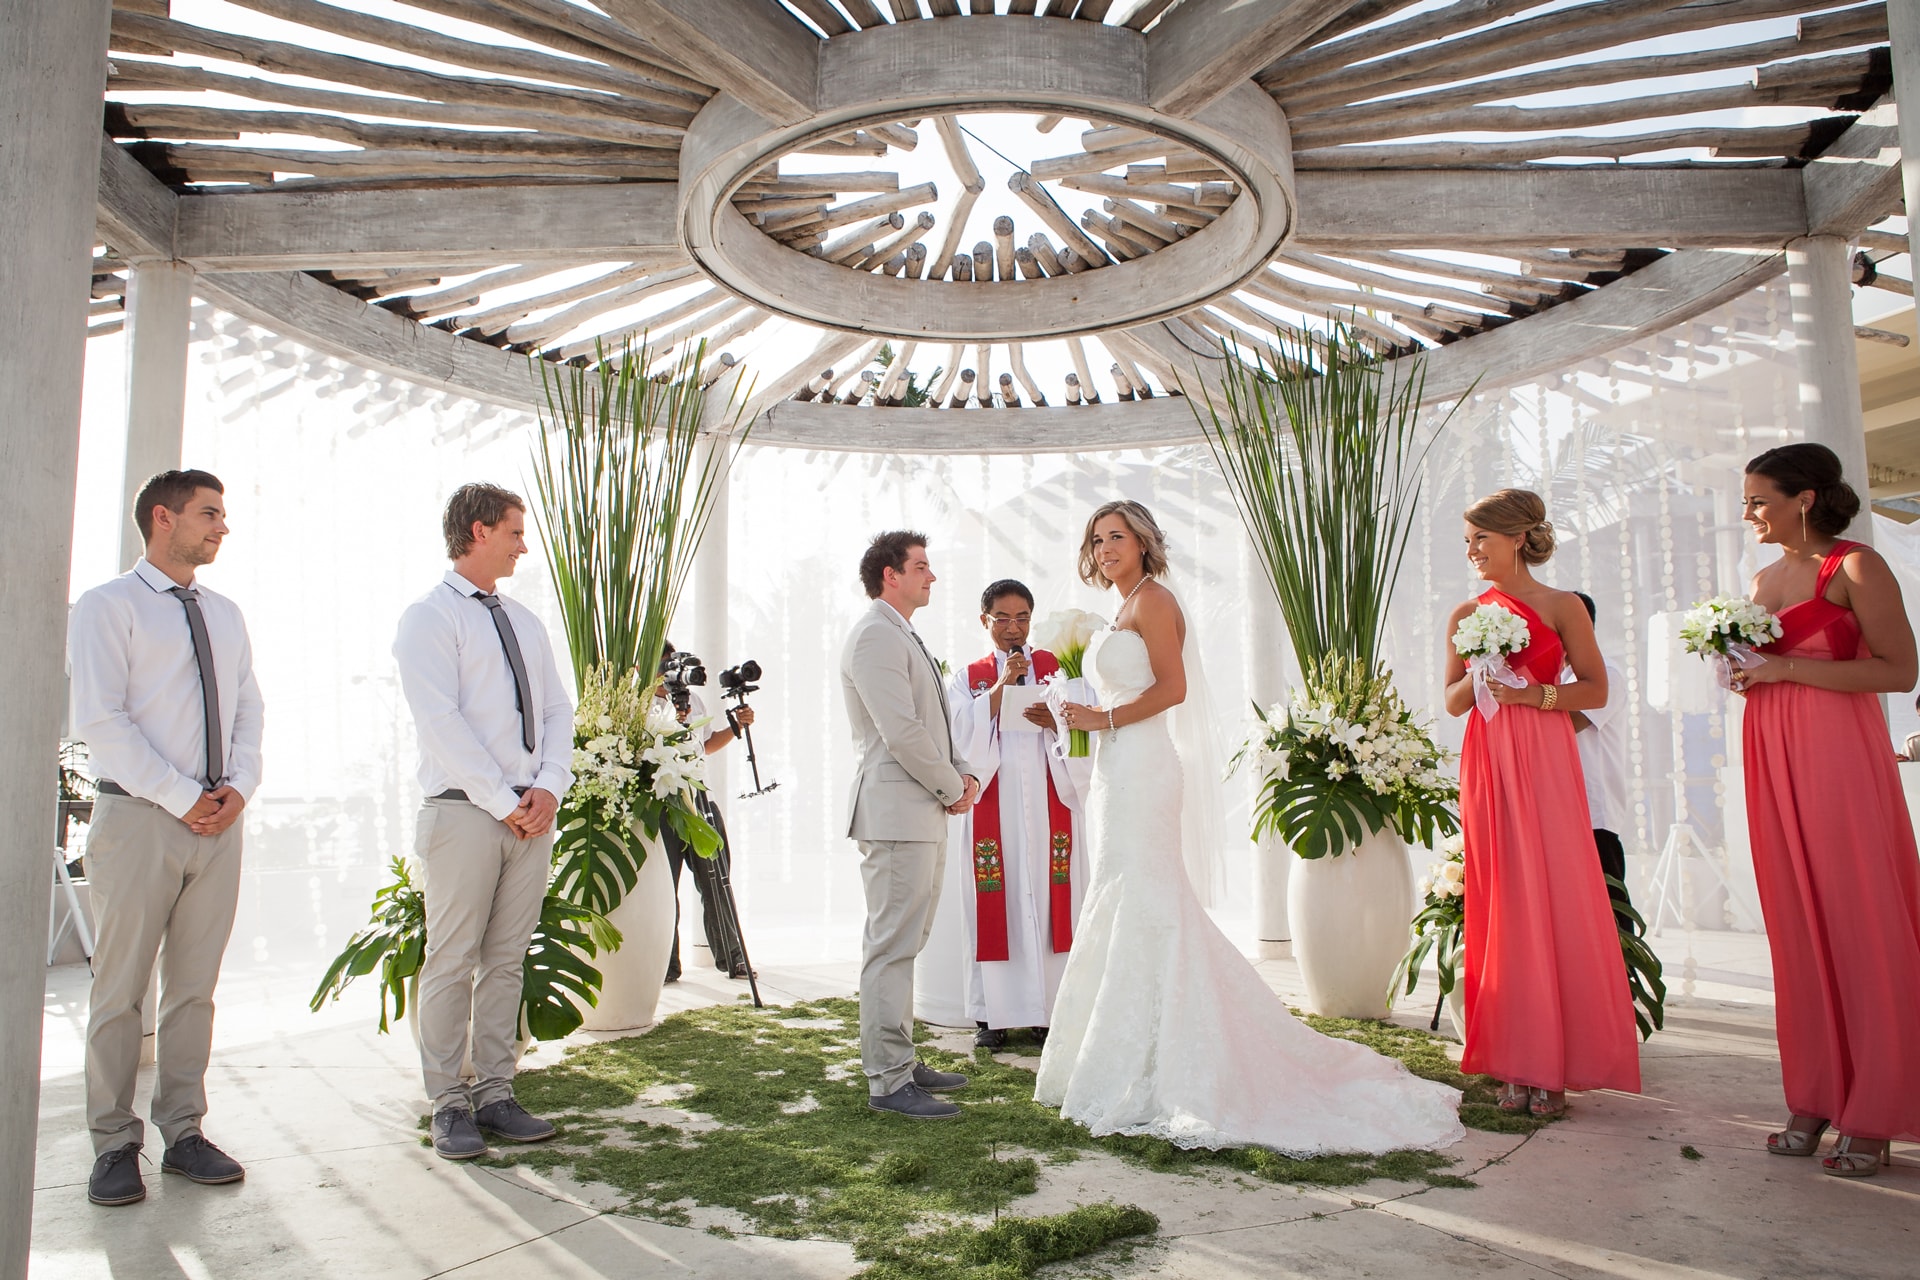 Bali Beachfront Hotel Wedding - Wedding Vow at the altar